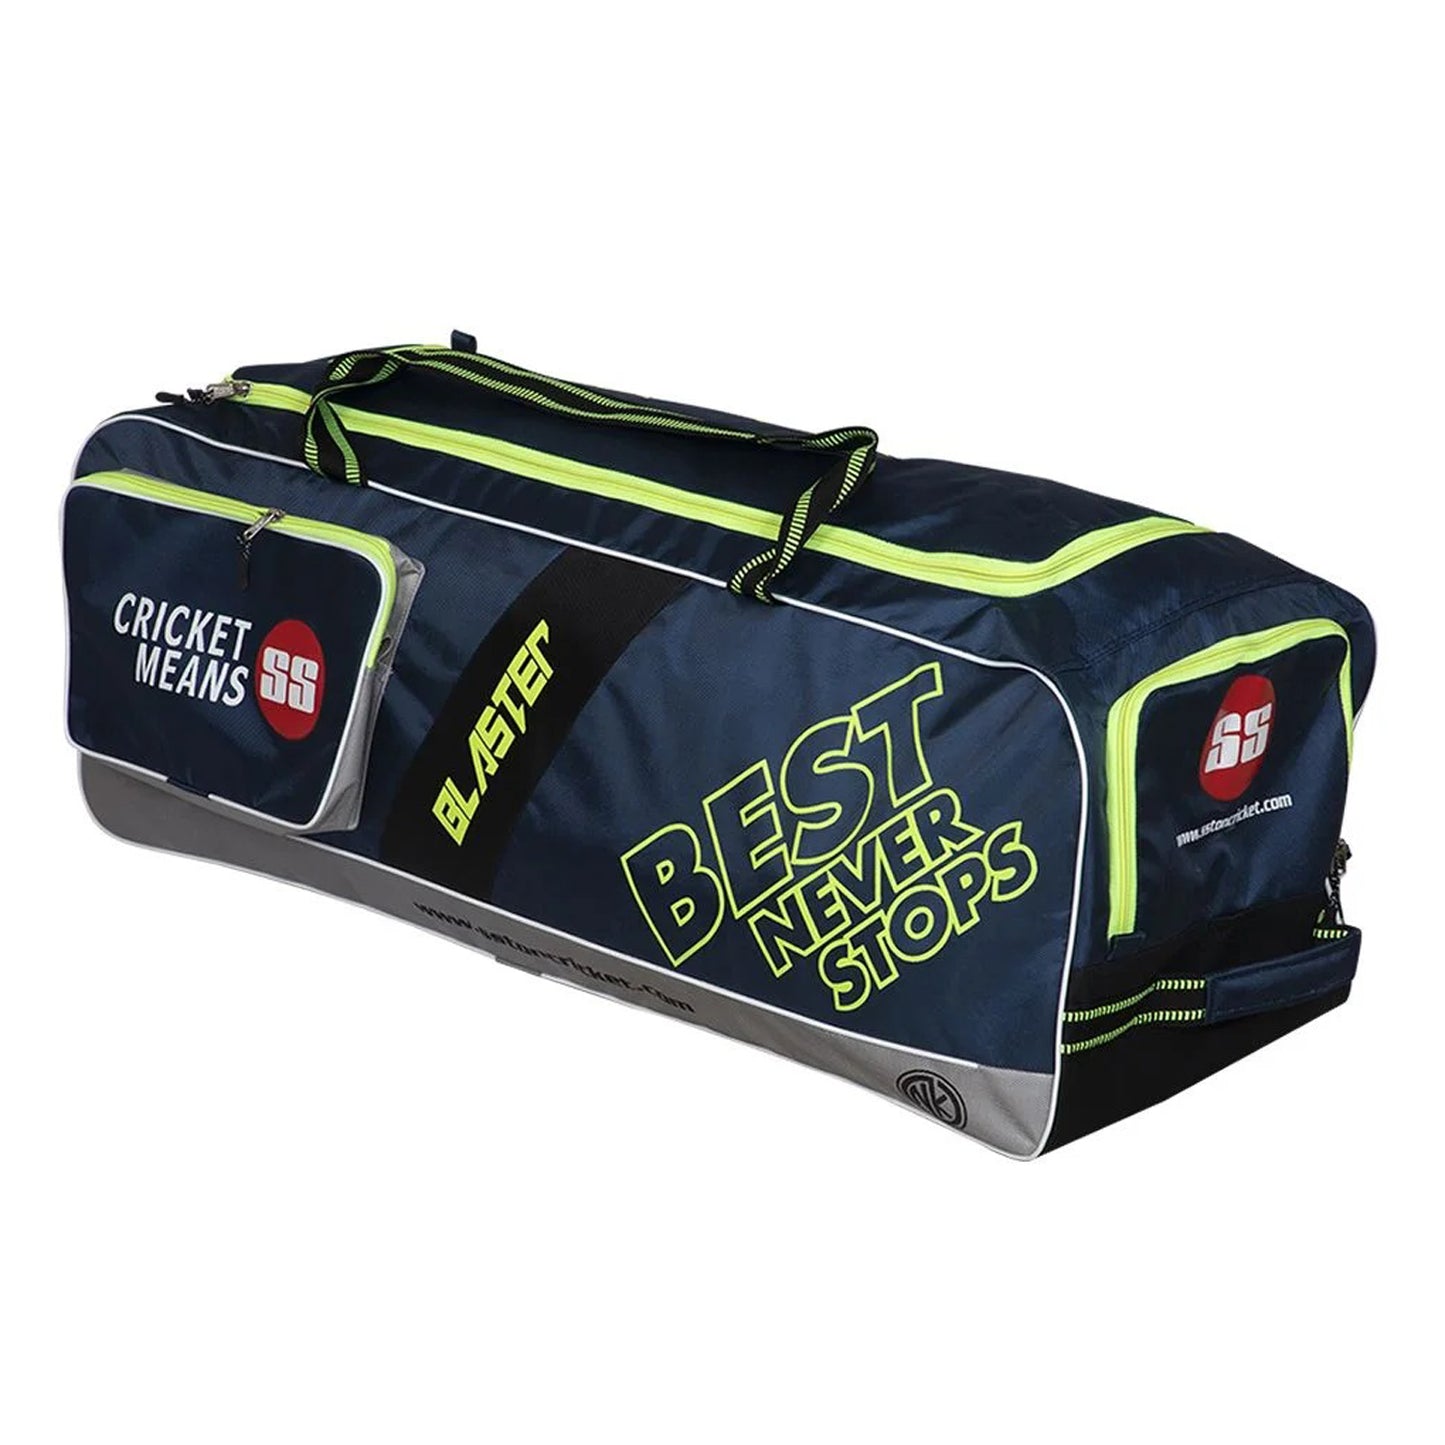 SS Blaster Wheels Cricket Kit Bag - Best Price online Prokicksports.com